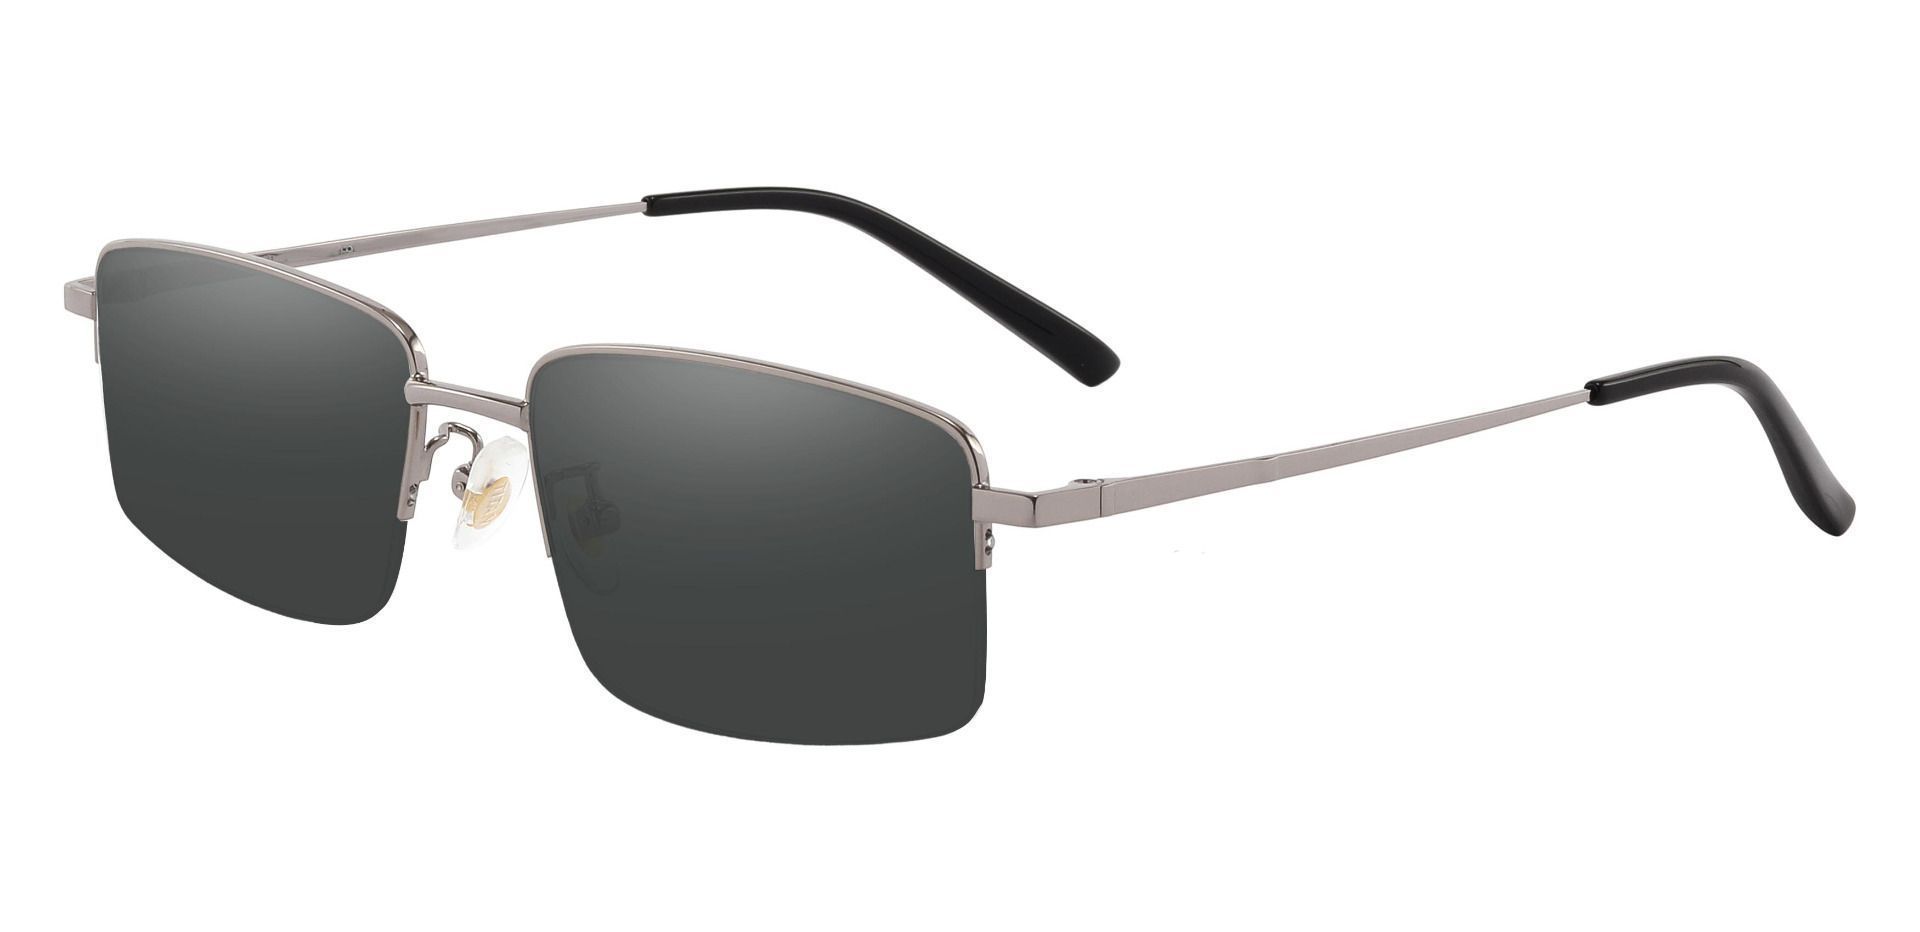 Wayne Rectangle Non-Rx Sunglasses - Gray Frame With Gray Lenses